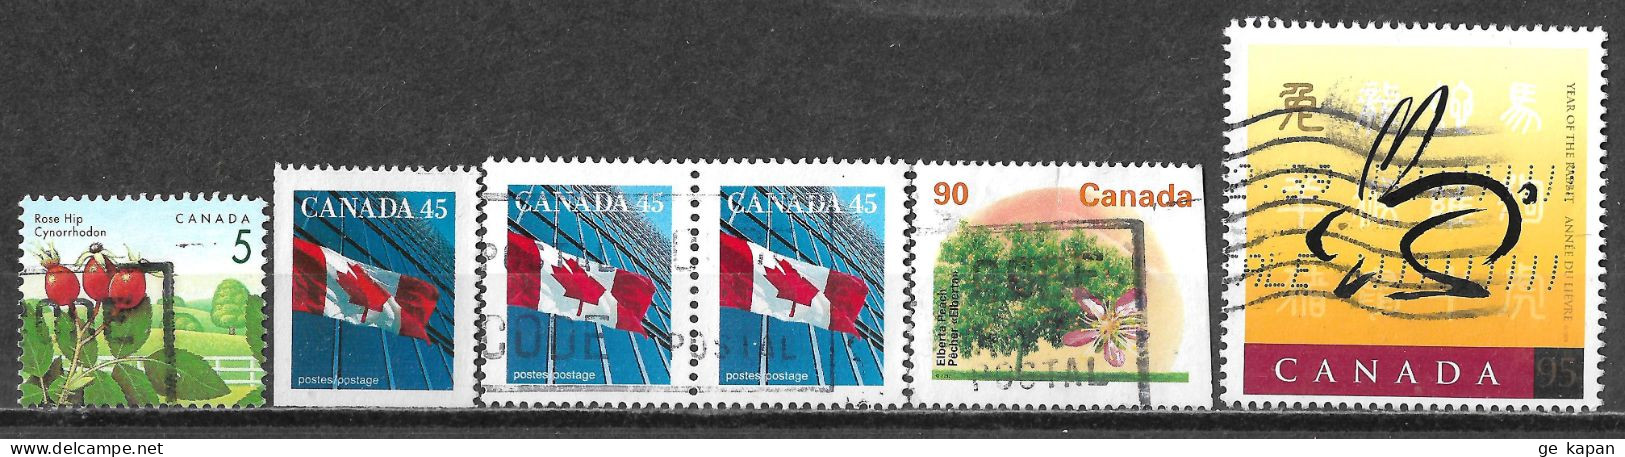 1991,1999 CANADA Set Of 6 USED Stamps (Scott # 1352,1361,1374,1768) CV $3.50 - Gebraucht